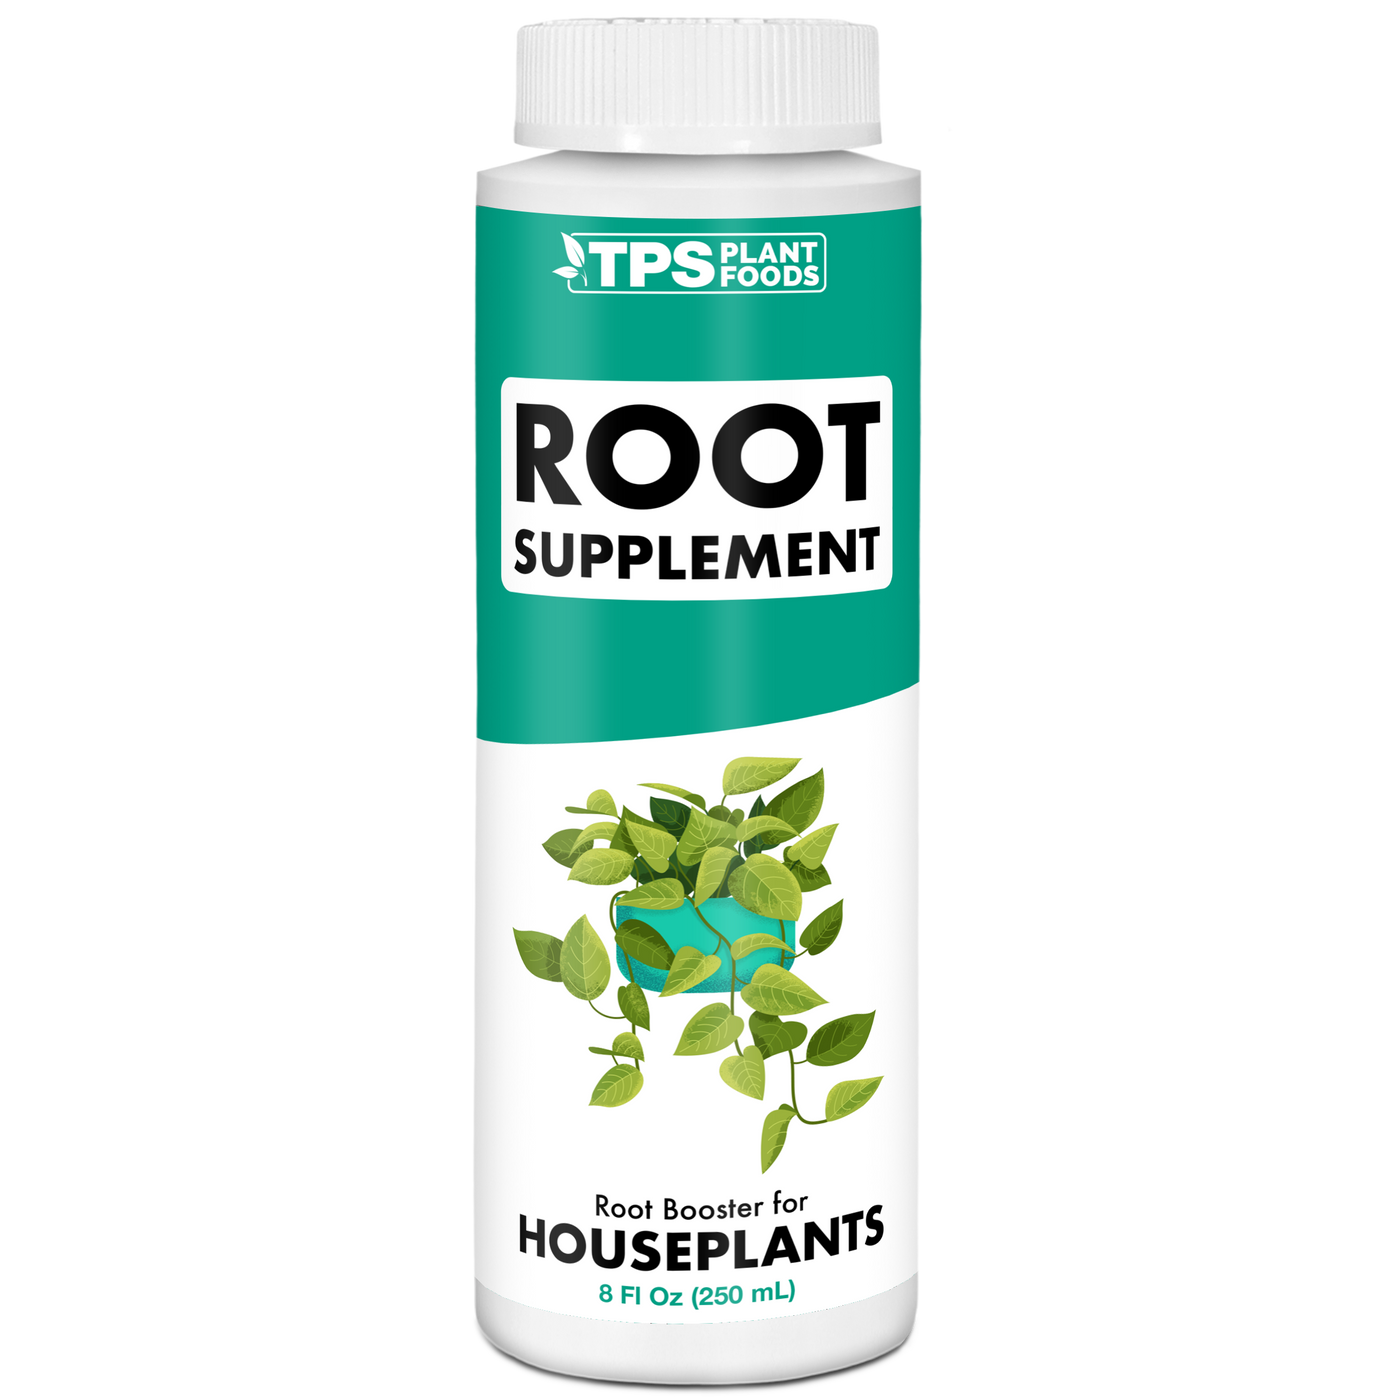 Houseplant Root Supplement